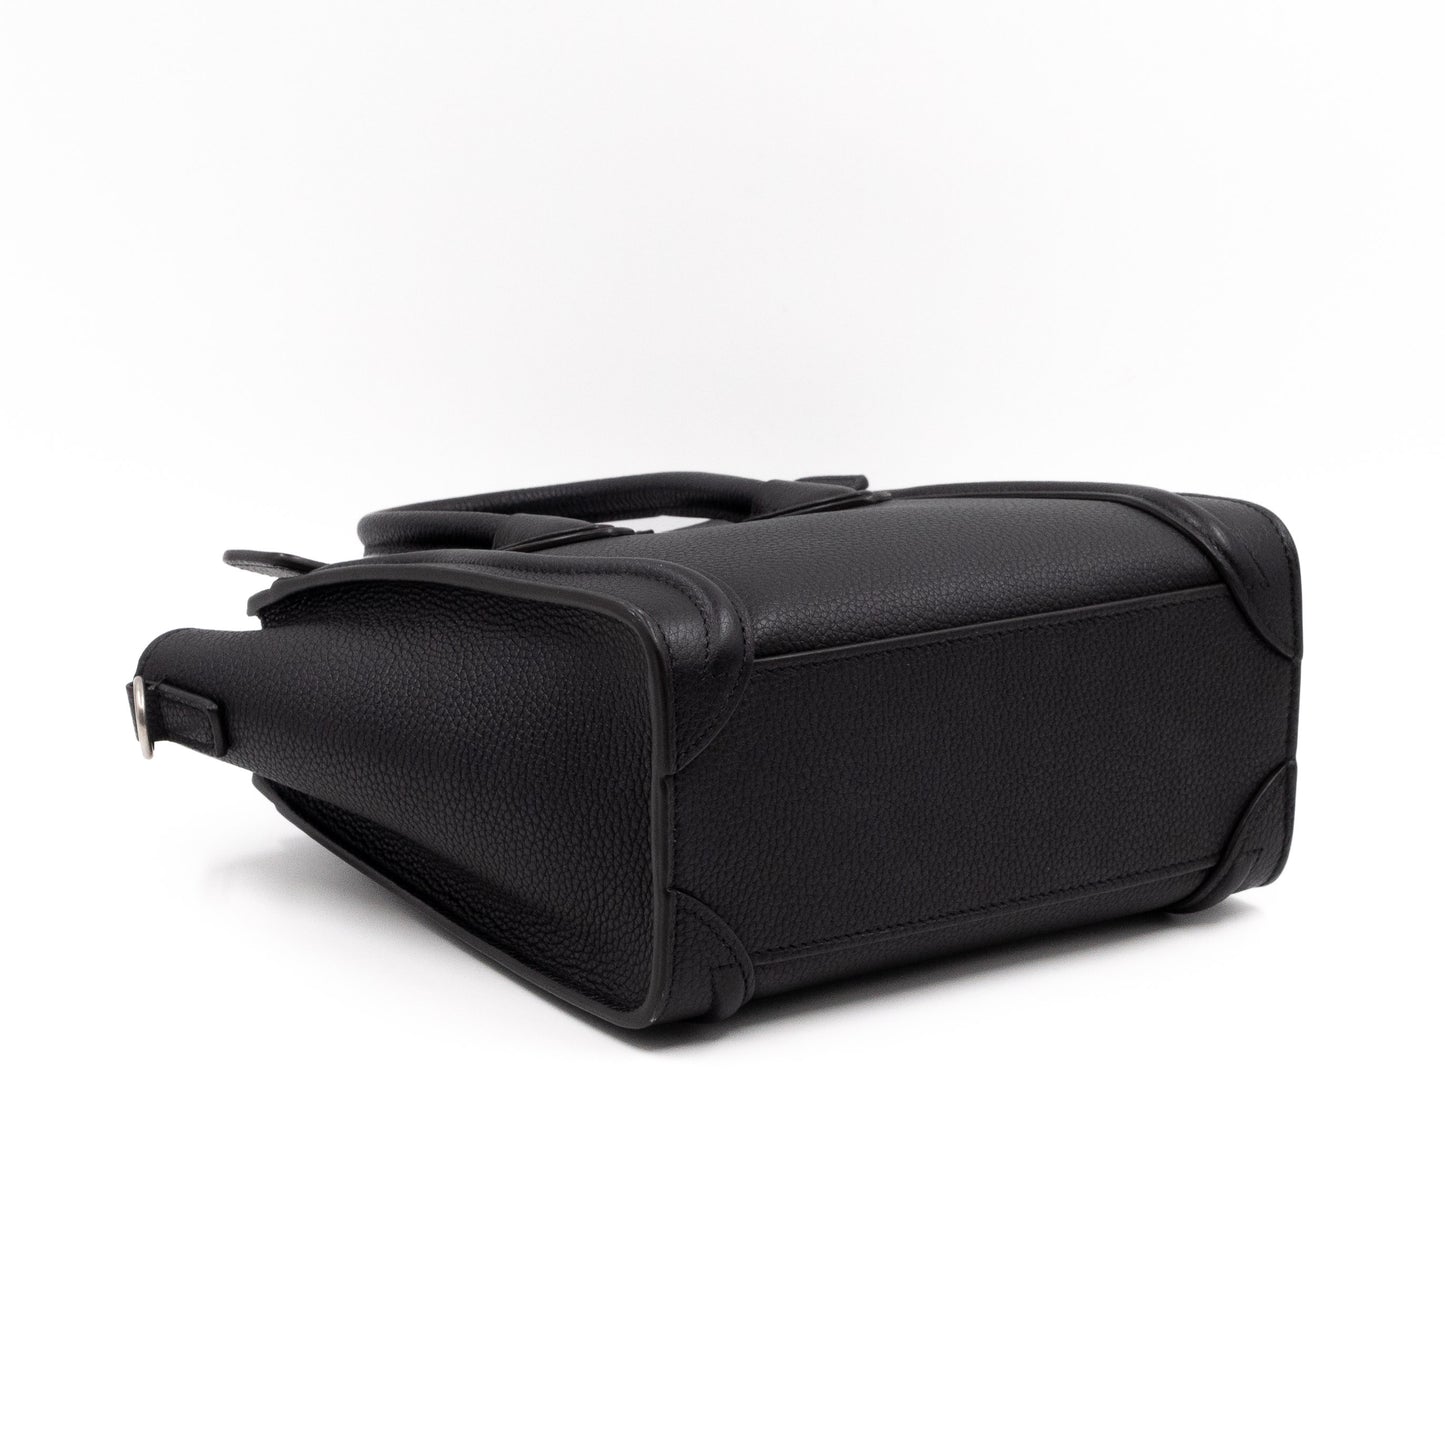 Nano Luggage Black Leather